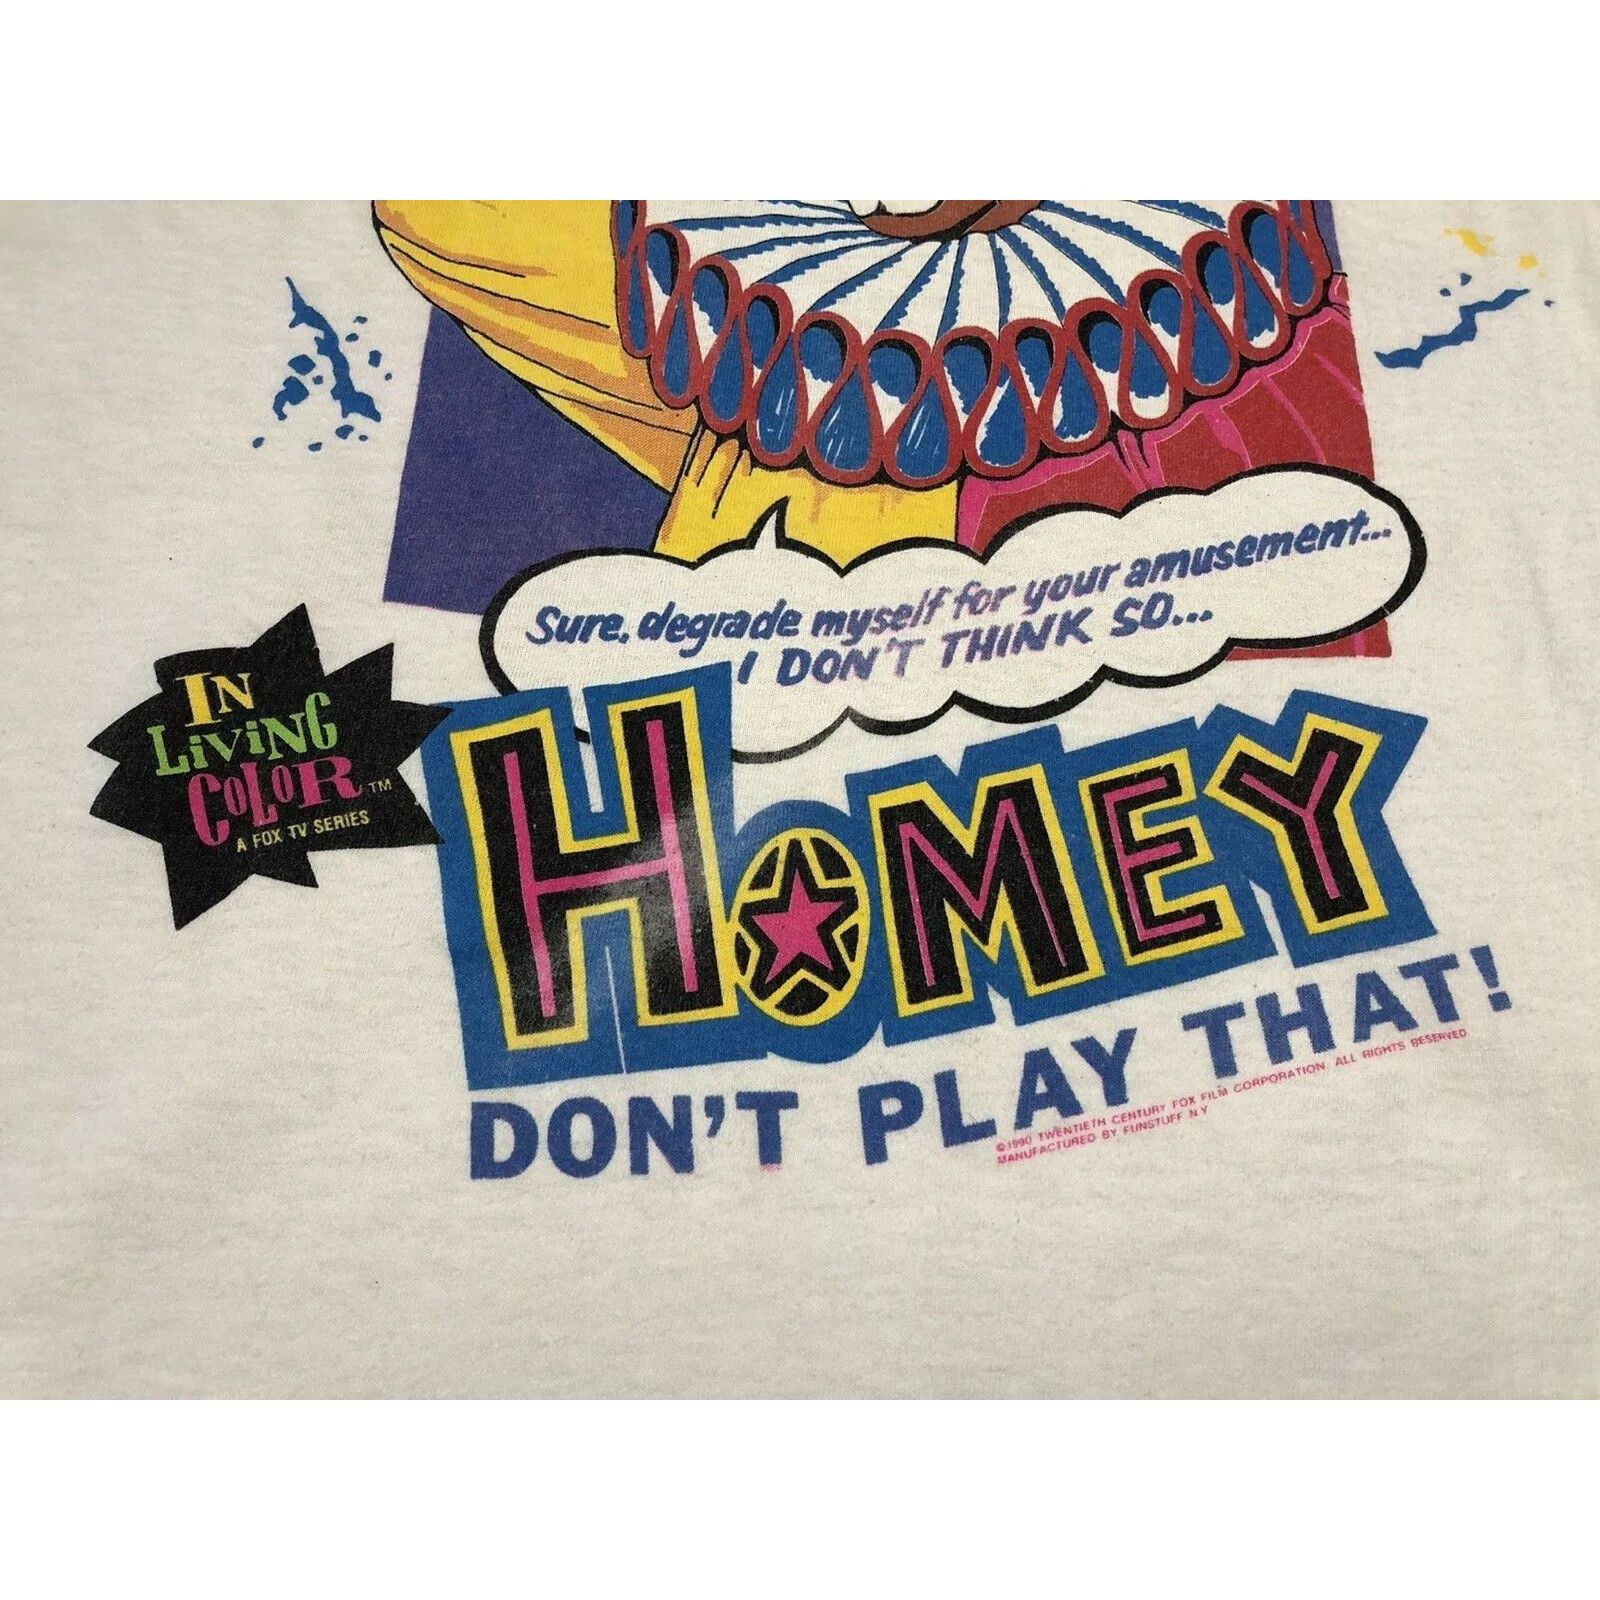 Vintage Rare Vintage In Living Color 1990 Homey the Clown T-Shirt Si Size US M / EU 48-50 / 2 - 5 Thumbnail